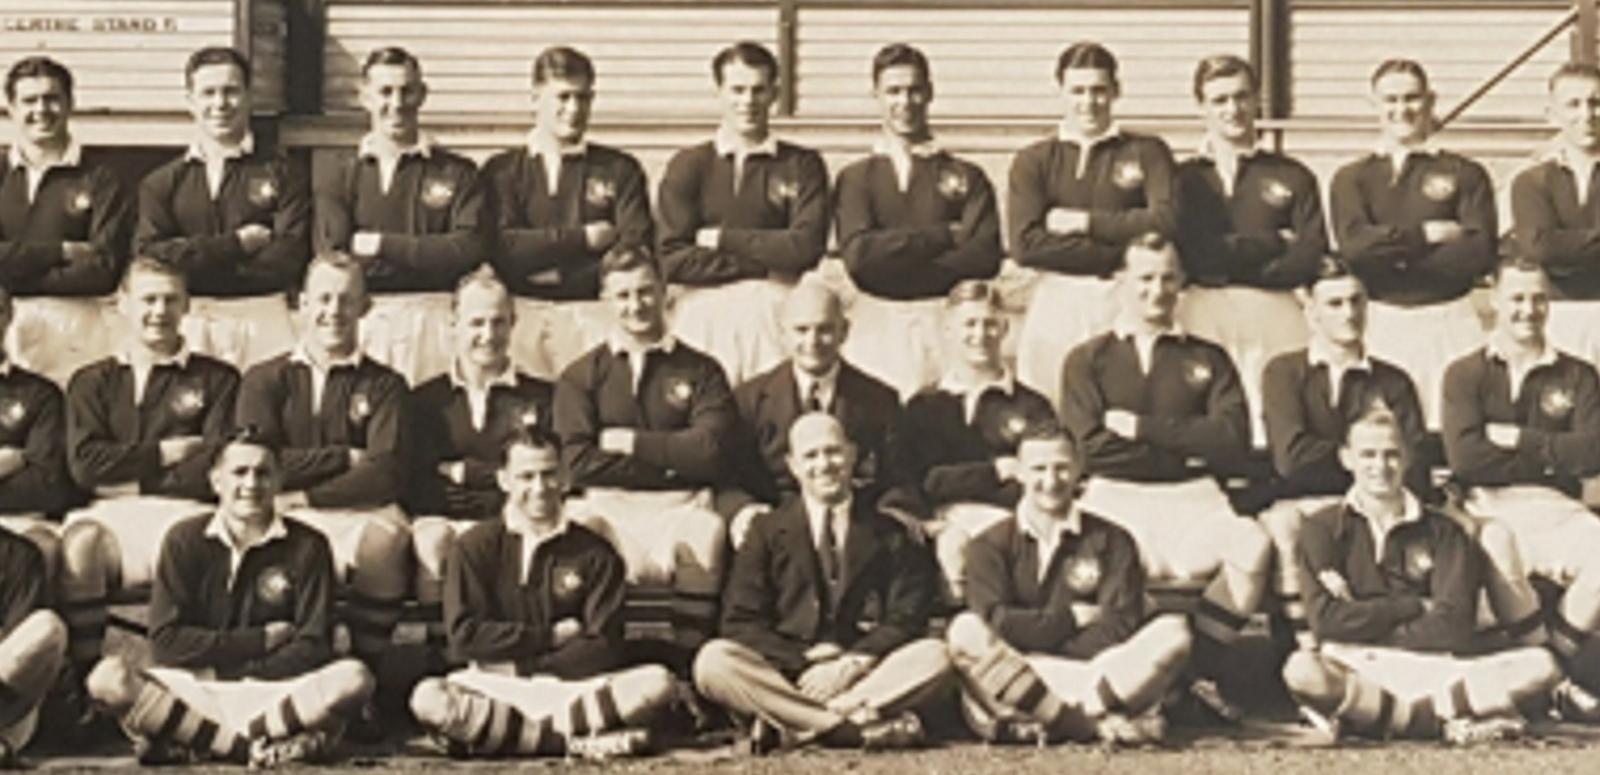 Australian Rugby Union team photo